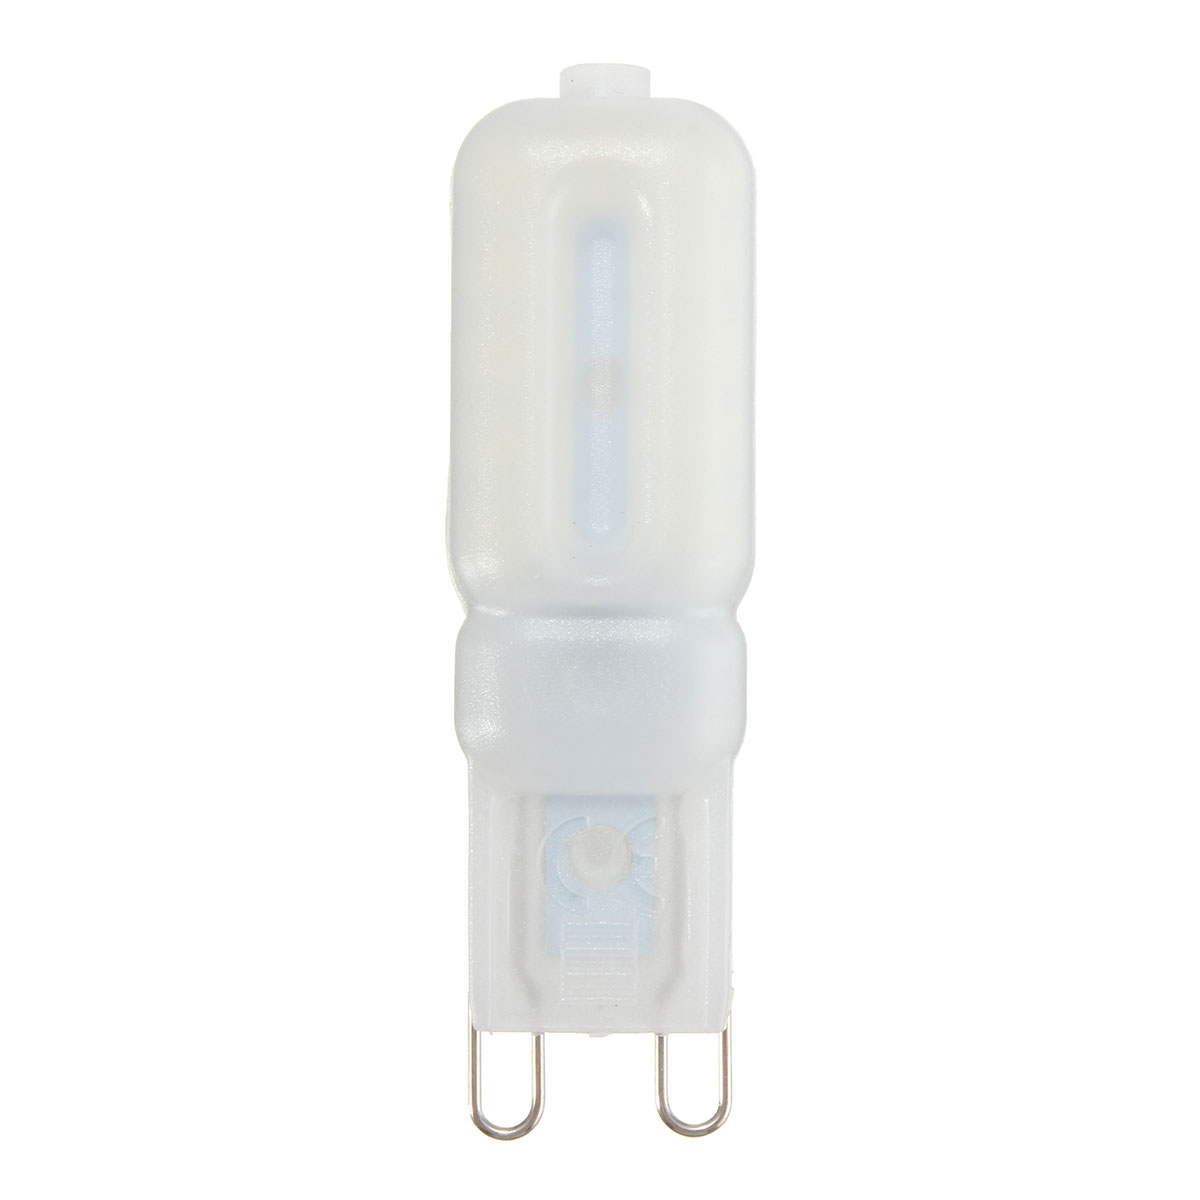 G9-5W-22-SMD-2835-LED-Pure-White-Warm-White-440Lm-Light-Lamp-Bulb-AC220V-1061537-9